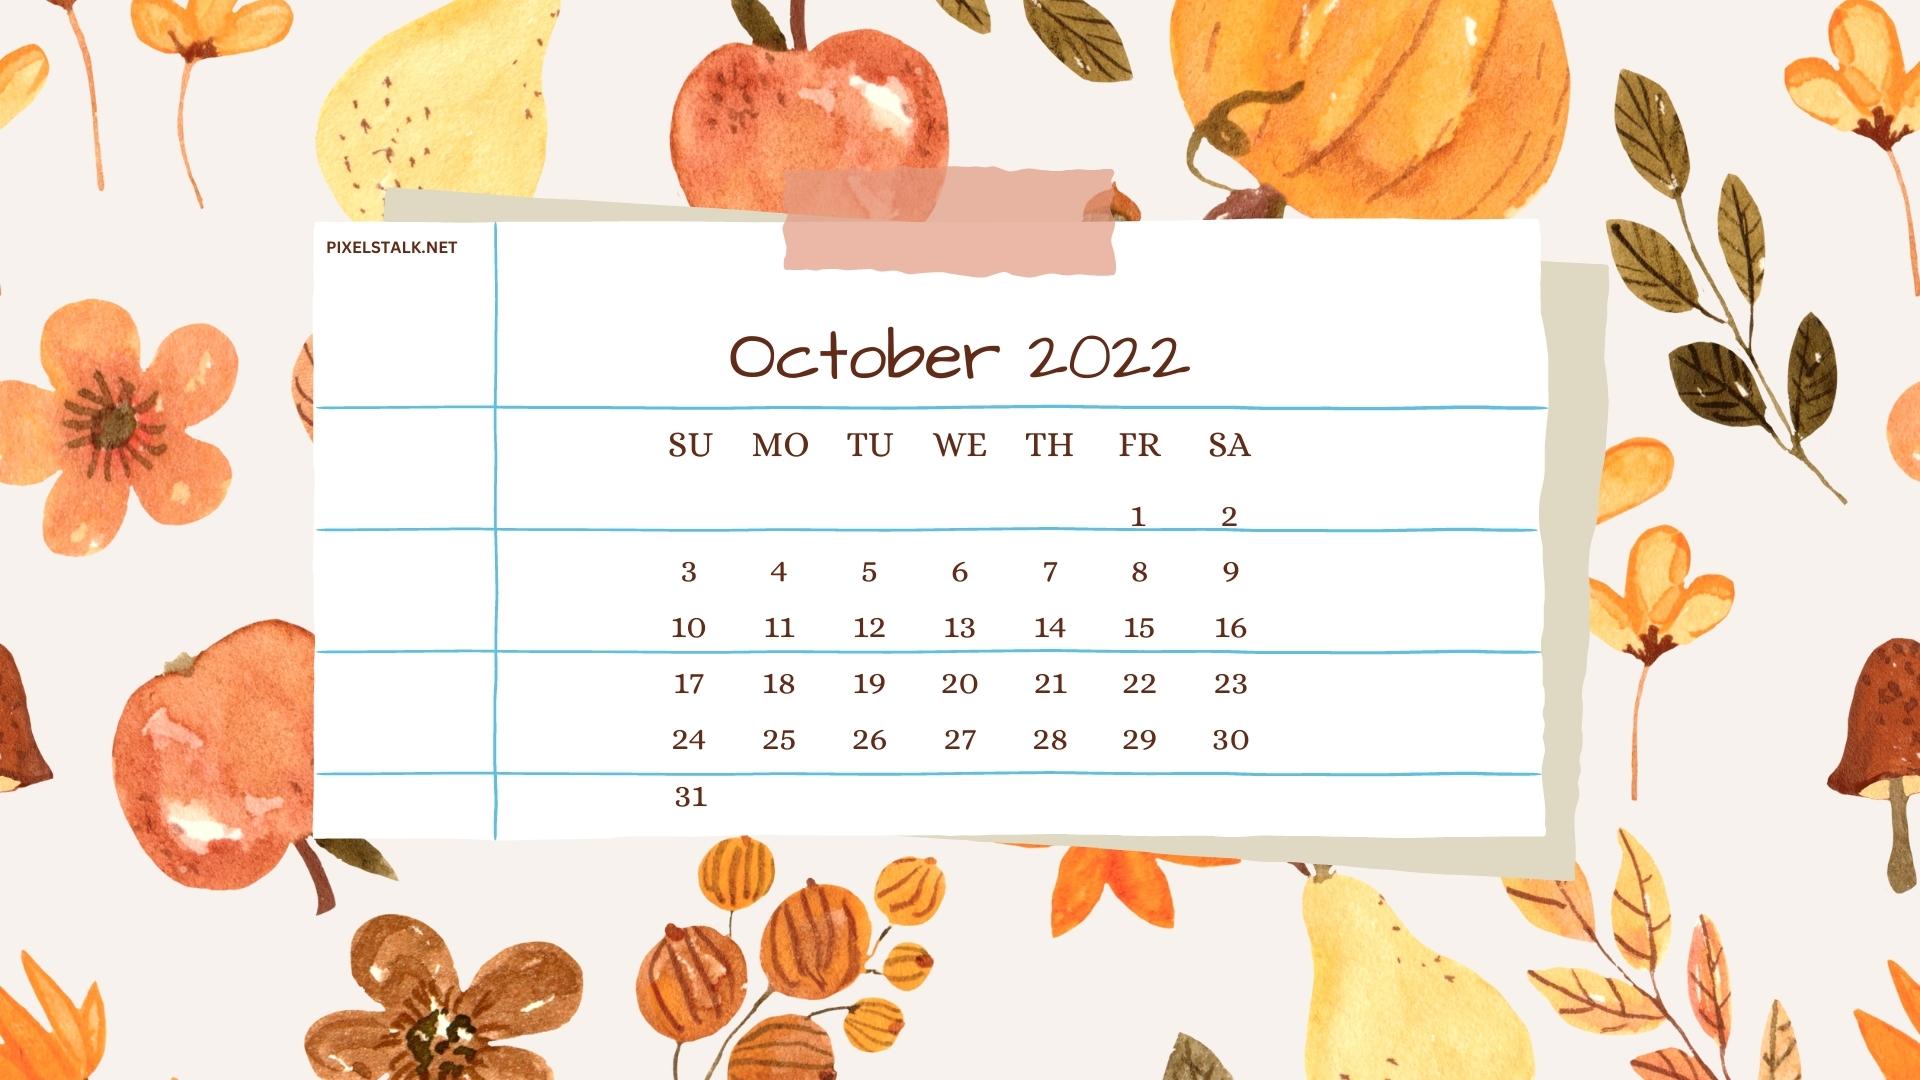 October 2022 Wallpaper for iPhone Plus a Desktop Organizer